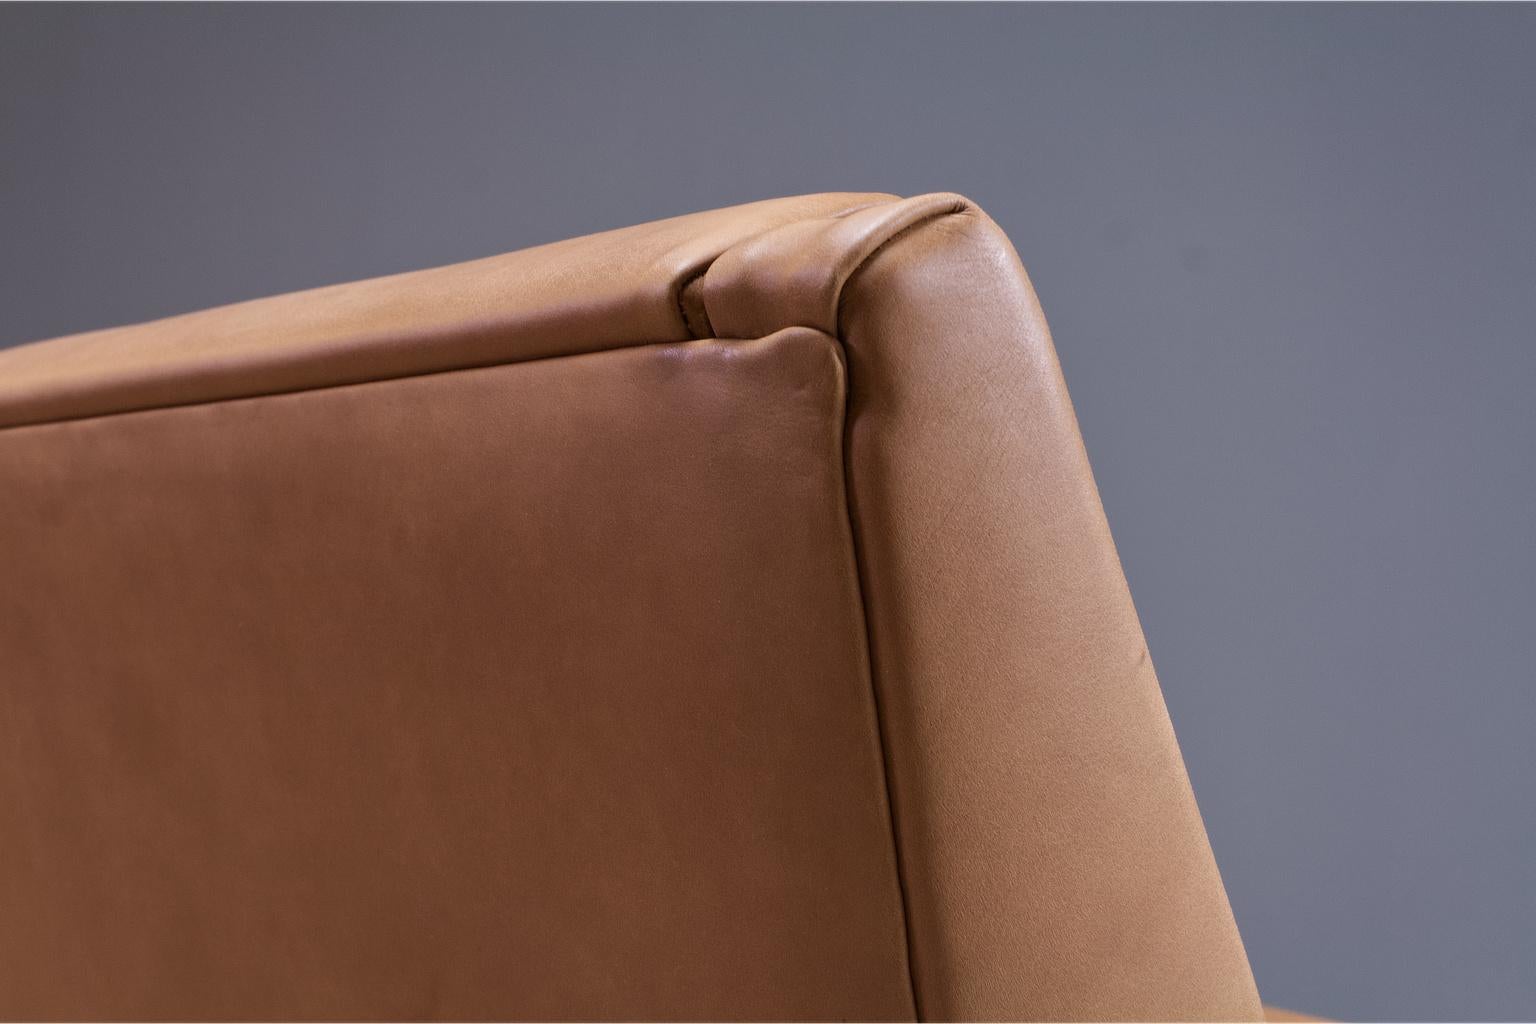 Mid-Century Modern Lounge Chair by Louis Van Teeffelen in Brown Leather, 1960s For Sale 1